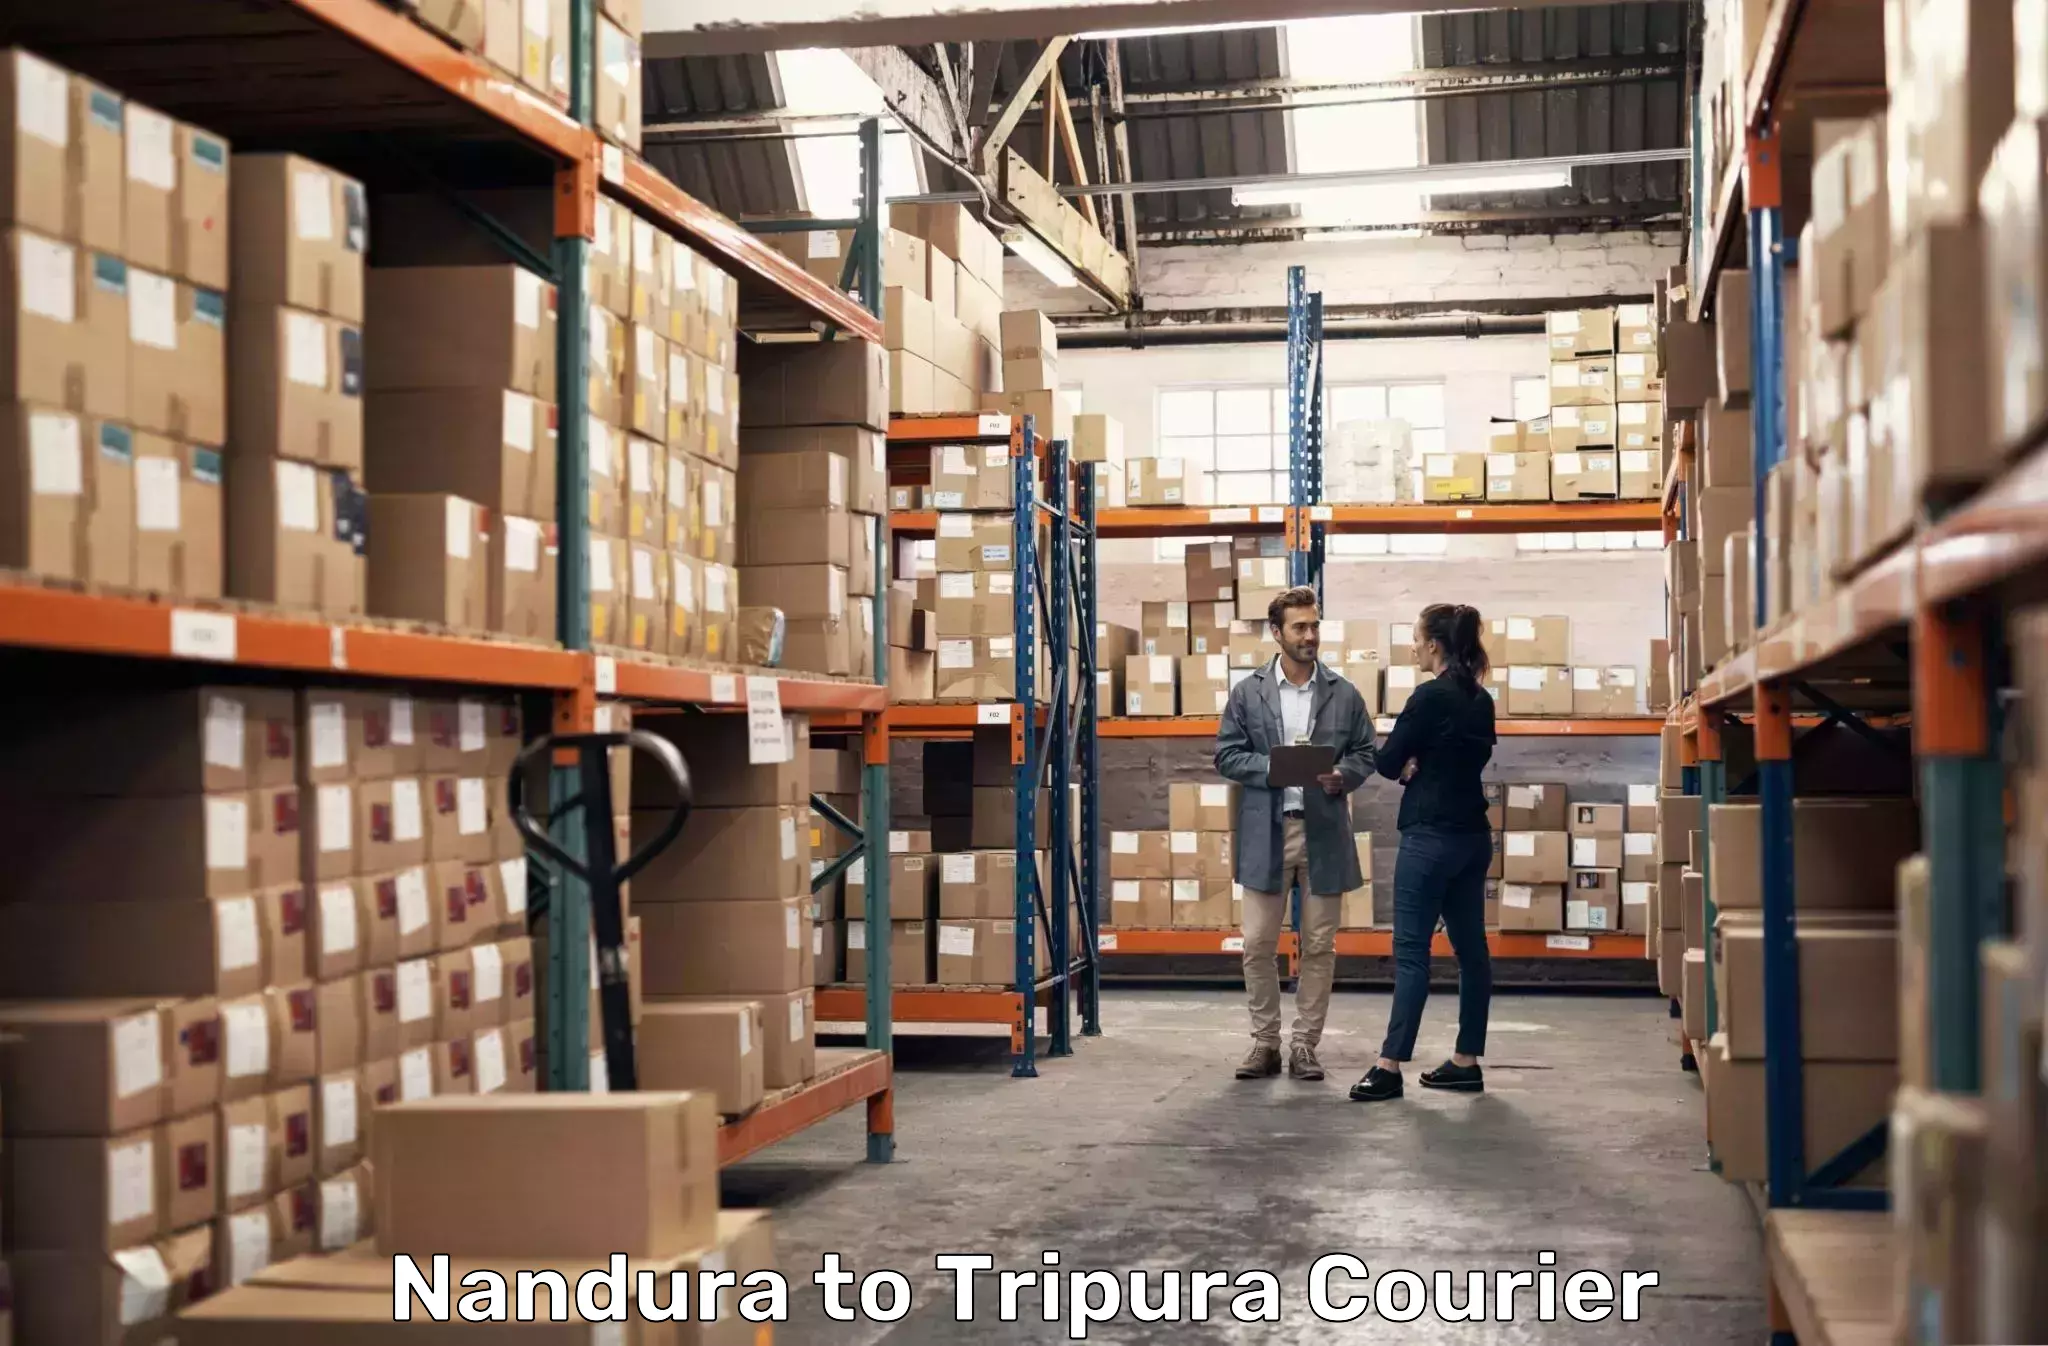 Courier service comparison Nandura to Kailashahar